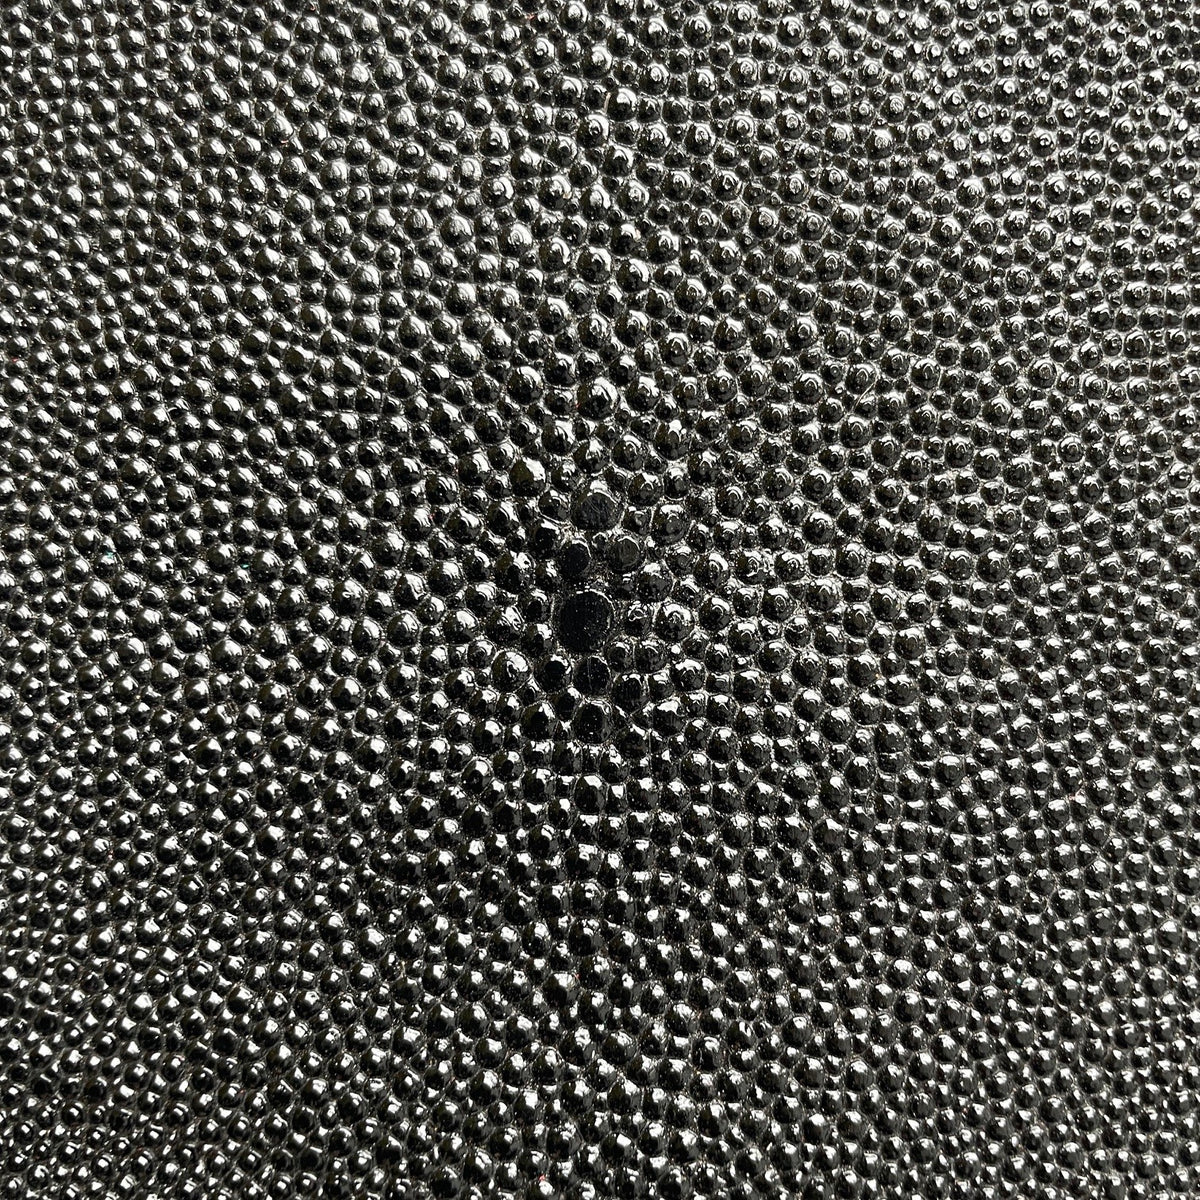 Stingray Skin | Black | 1.5/1.8mm | $161 ea.